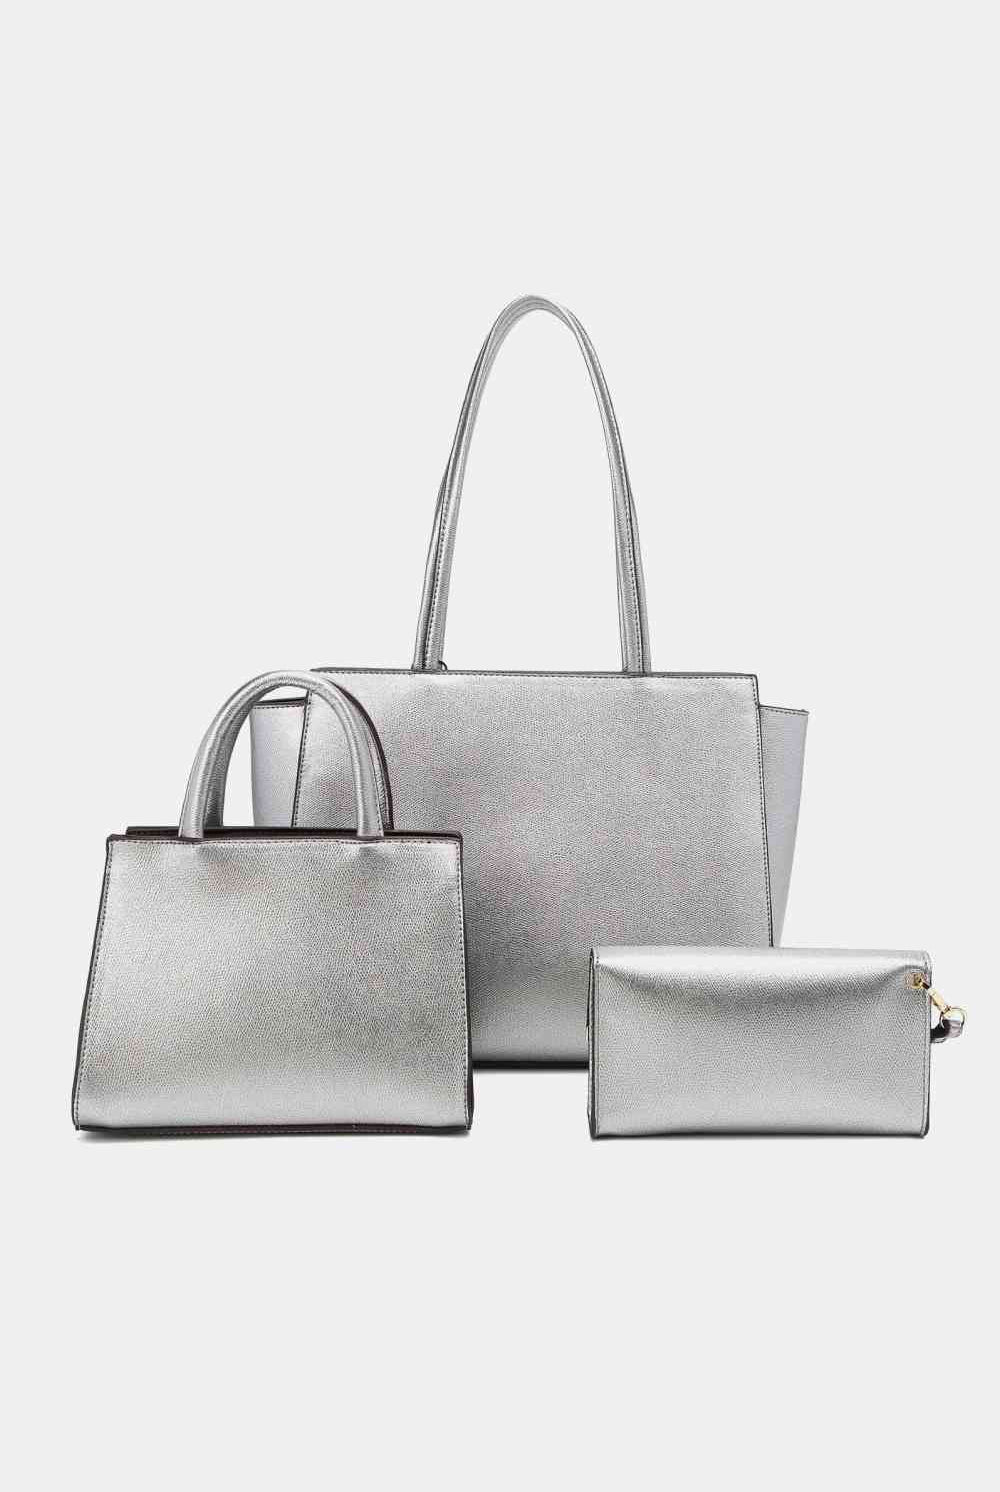 Lavender Nicole Lee USA Regina 3-Piece Satchel Bag Set Gifts